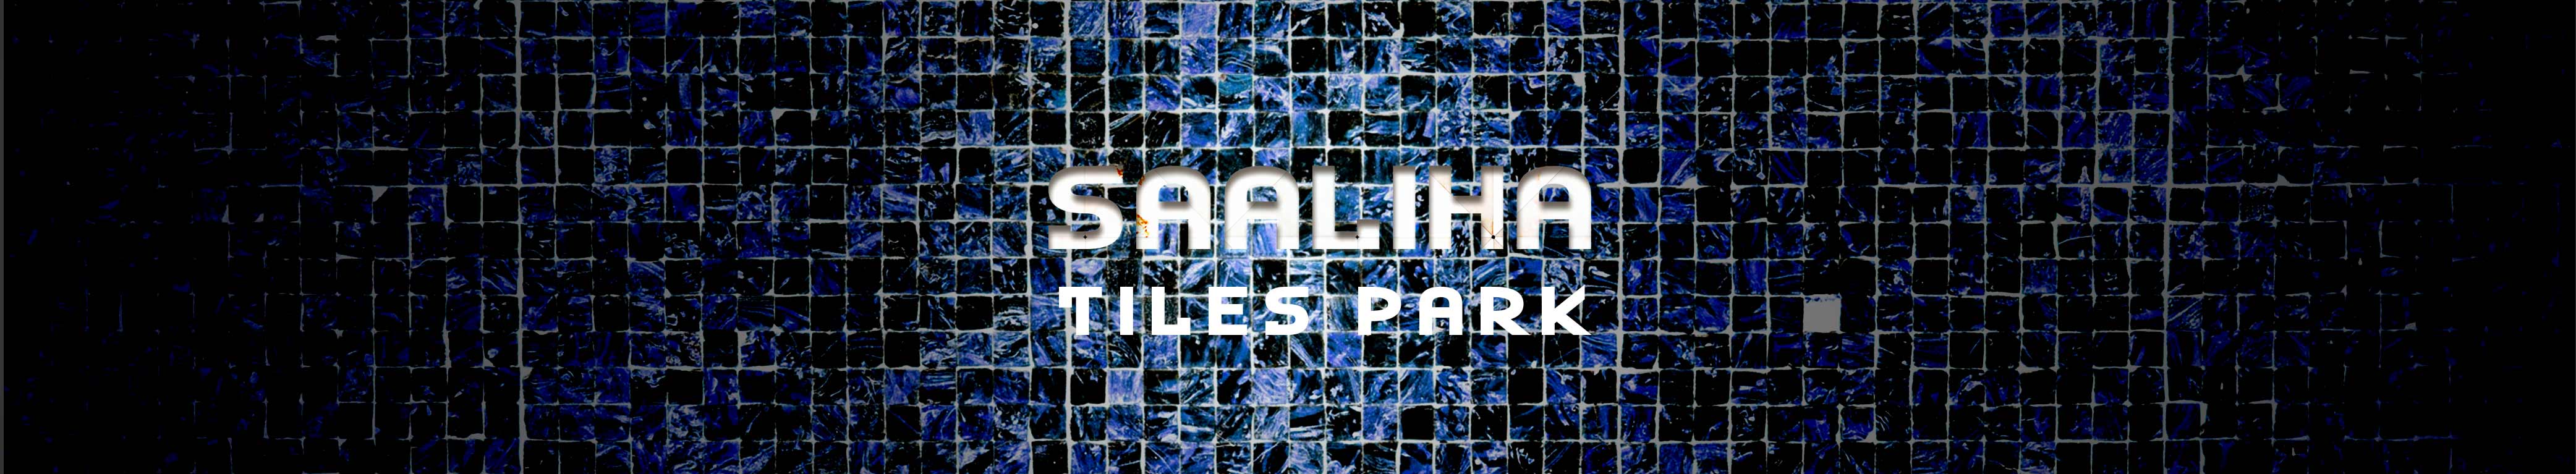 Saaliha Tiles Park Banner Image